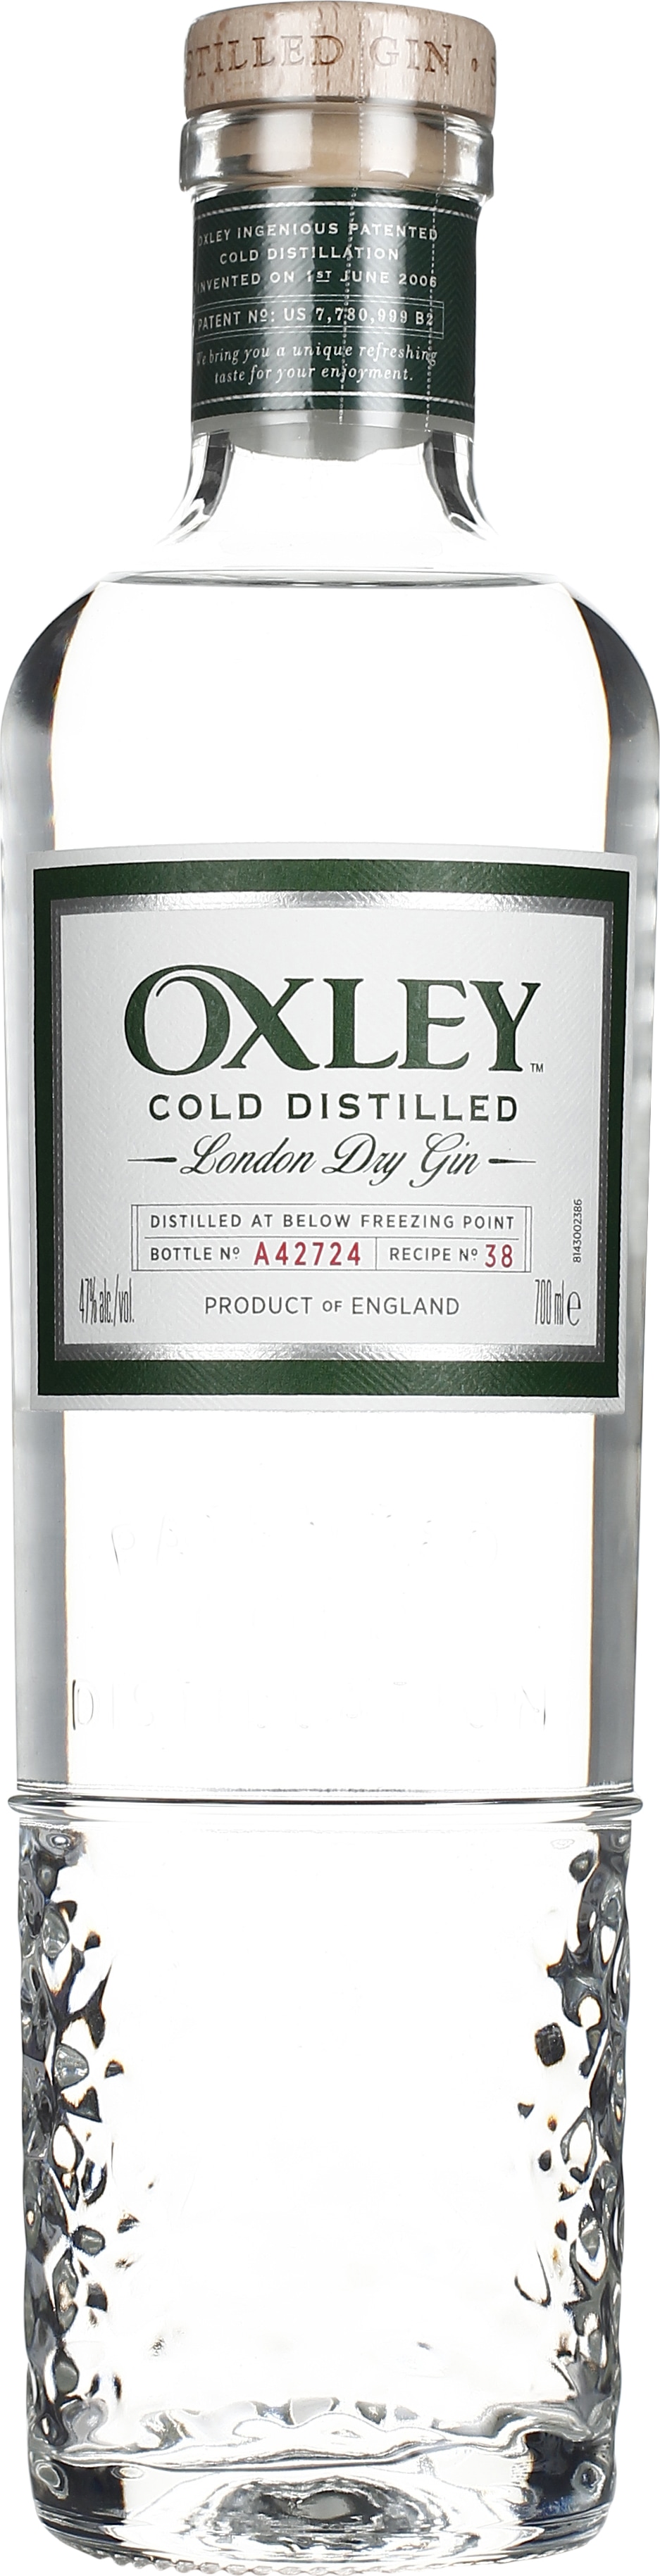 Drankdozijn Oxley London Dry Gin 70CL aanbieding